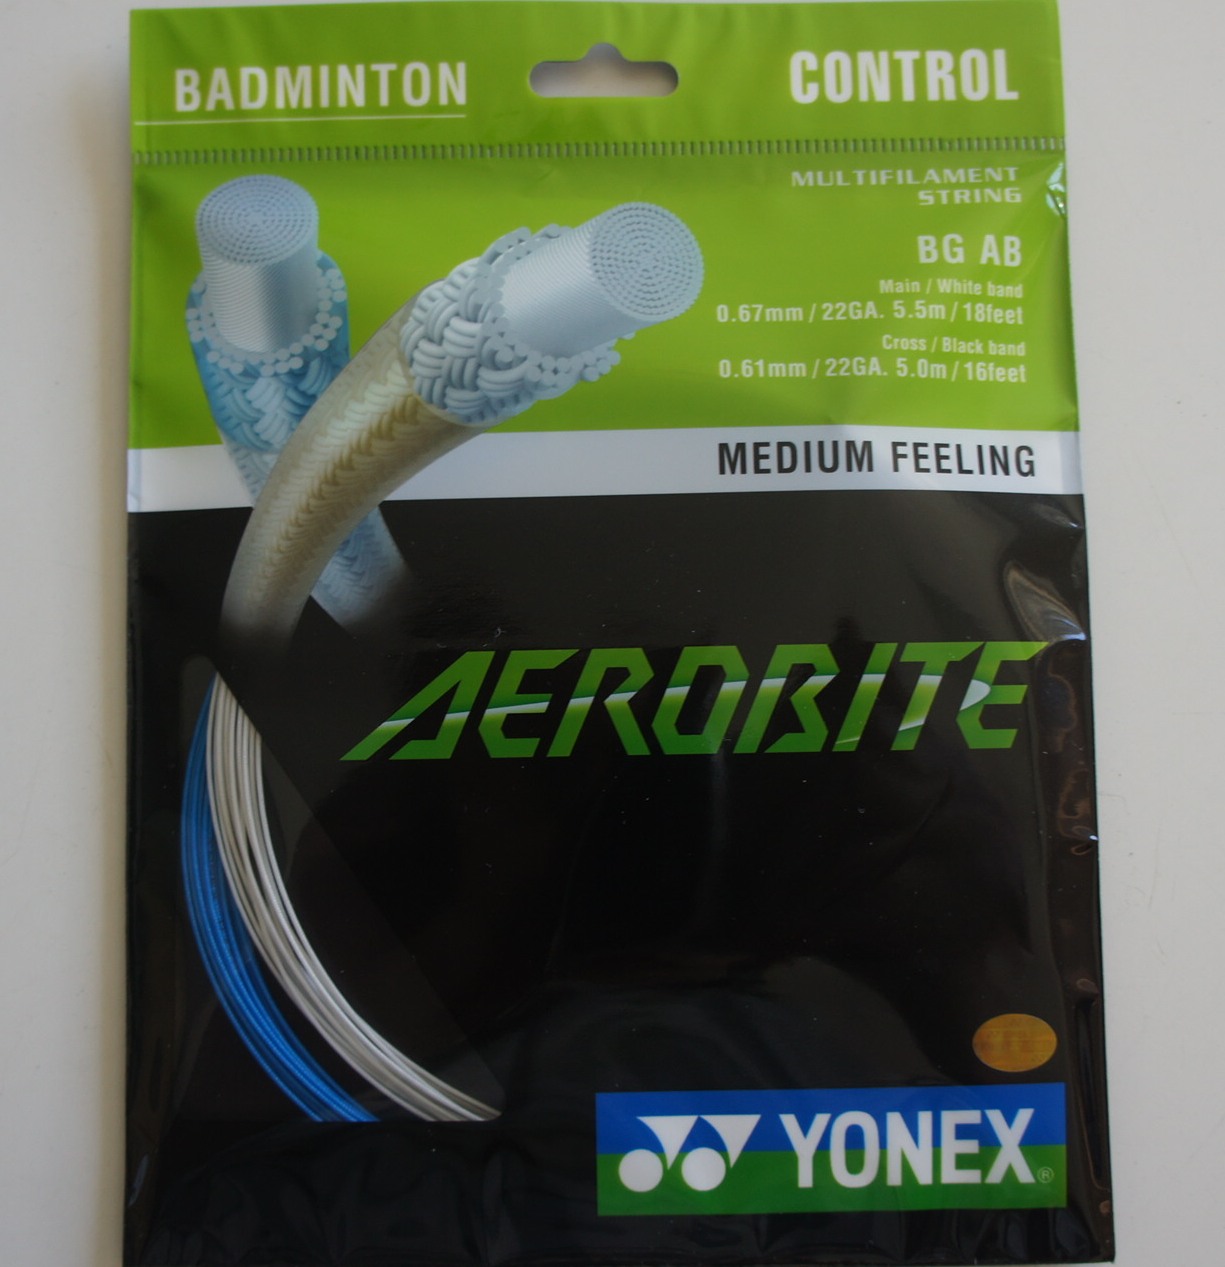 YONEX BG AB Aerobite Badminton String (2 Packs), Blue/White